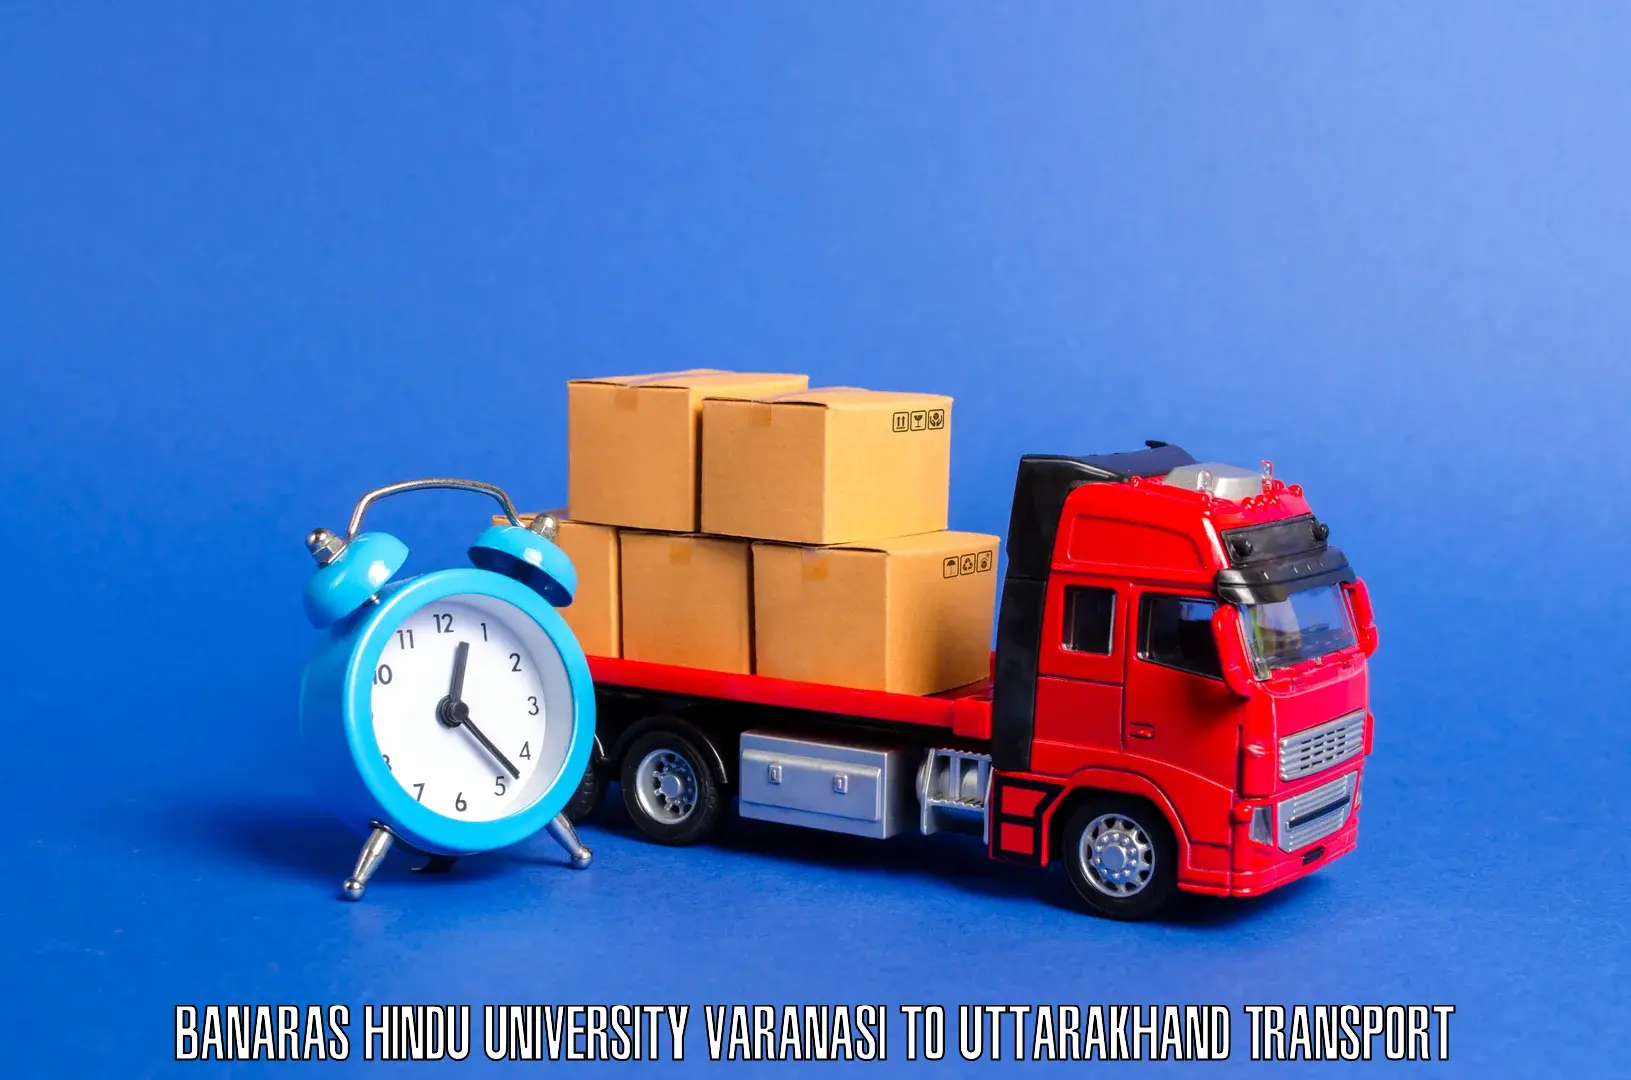 Pick up transport service Banaras Hindu University Varanasi to Nainital